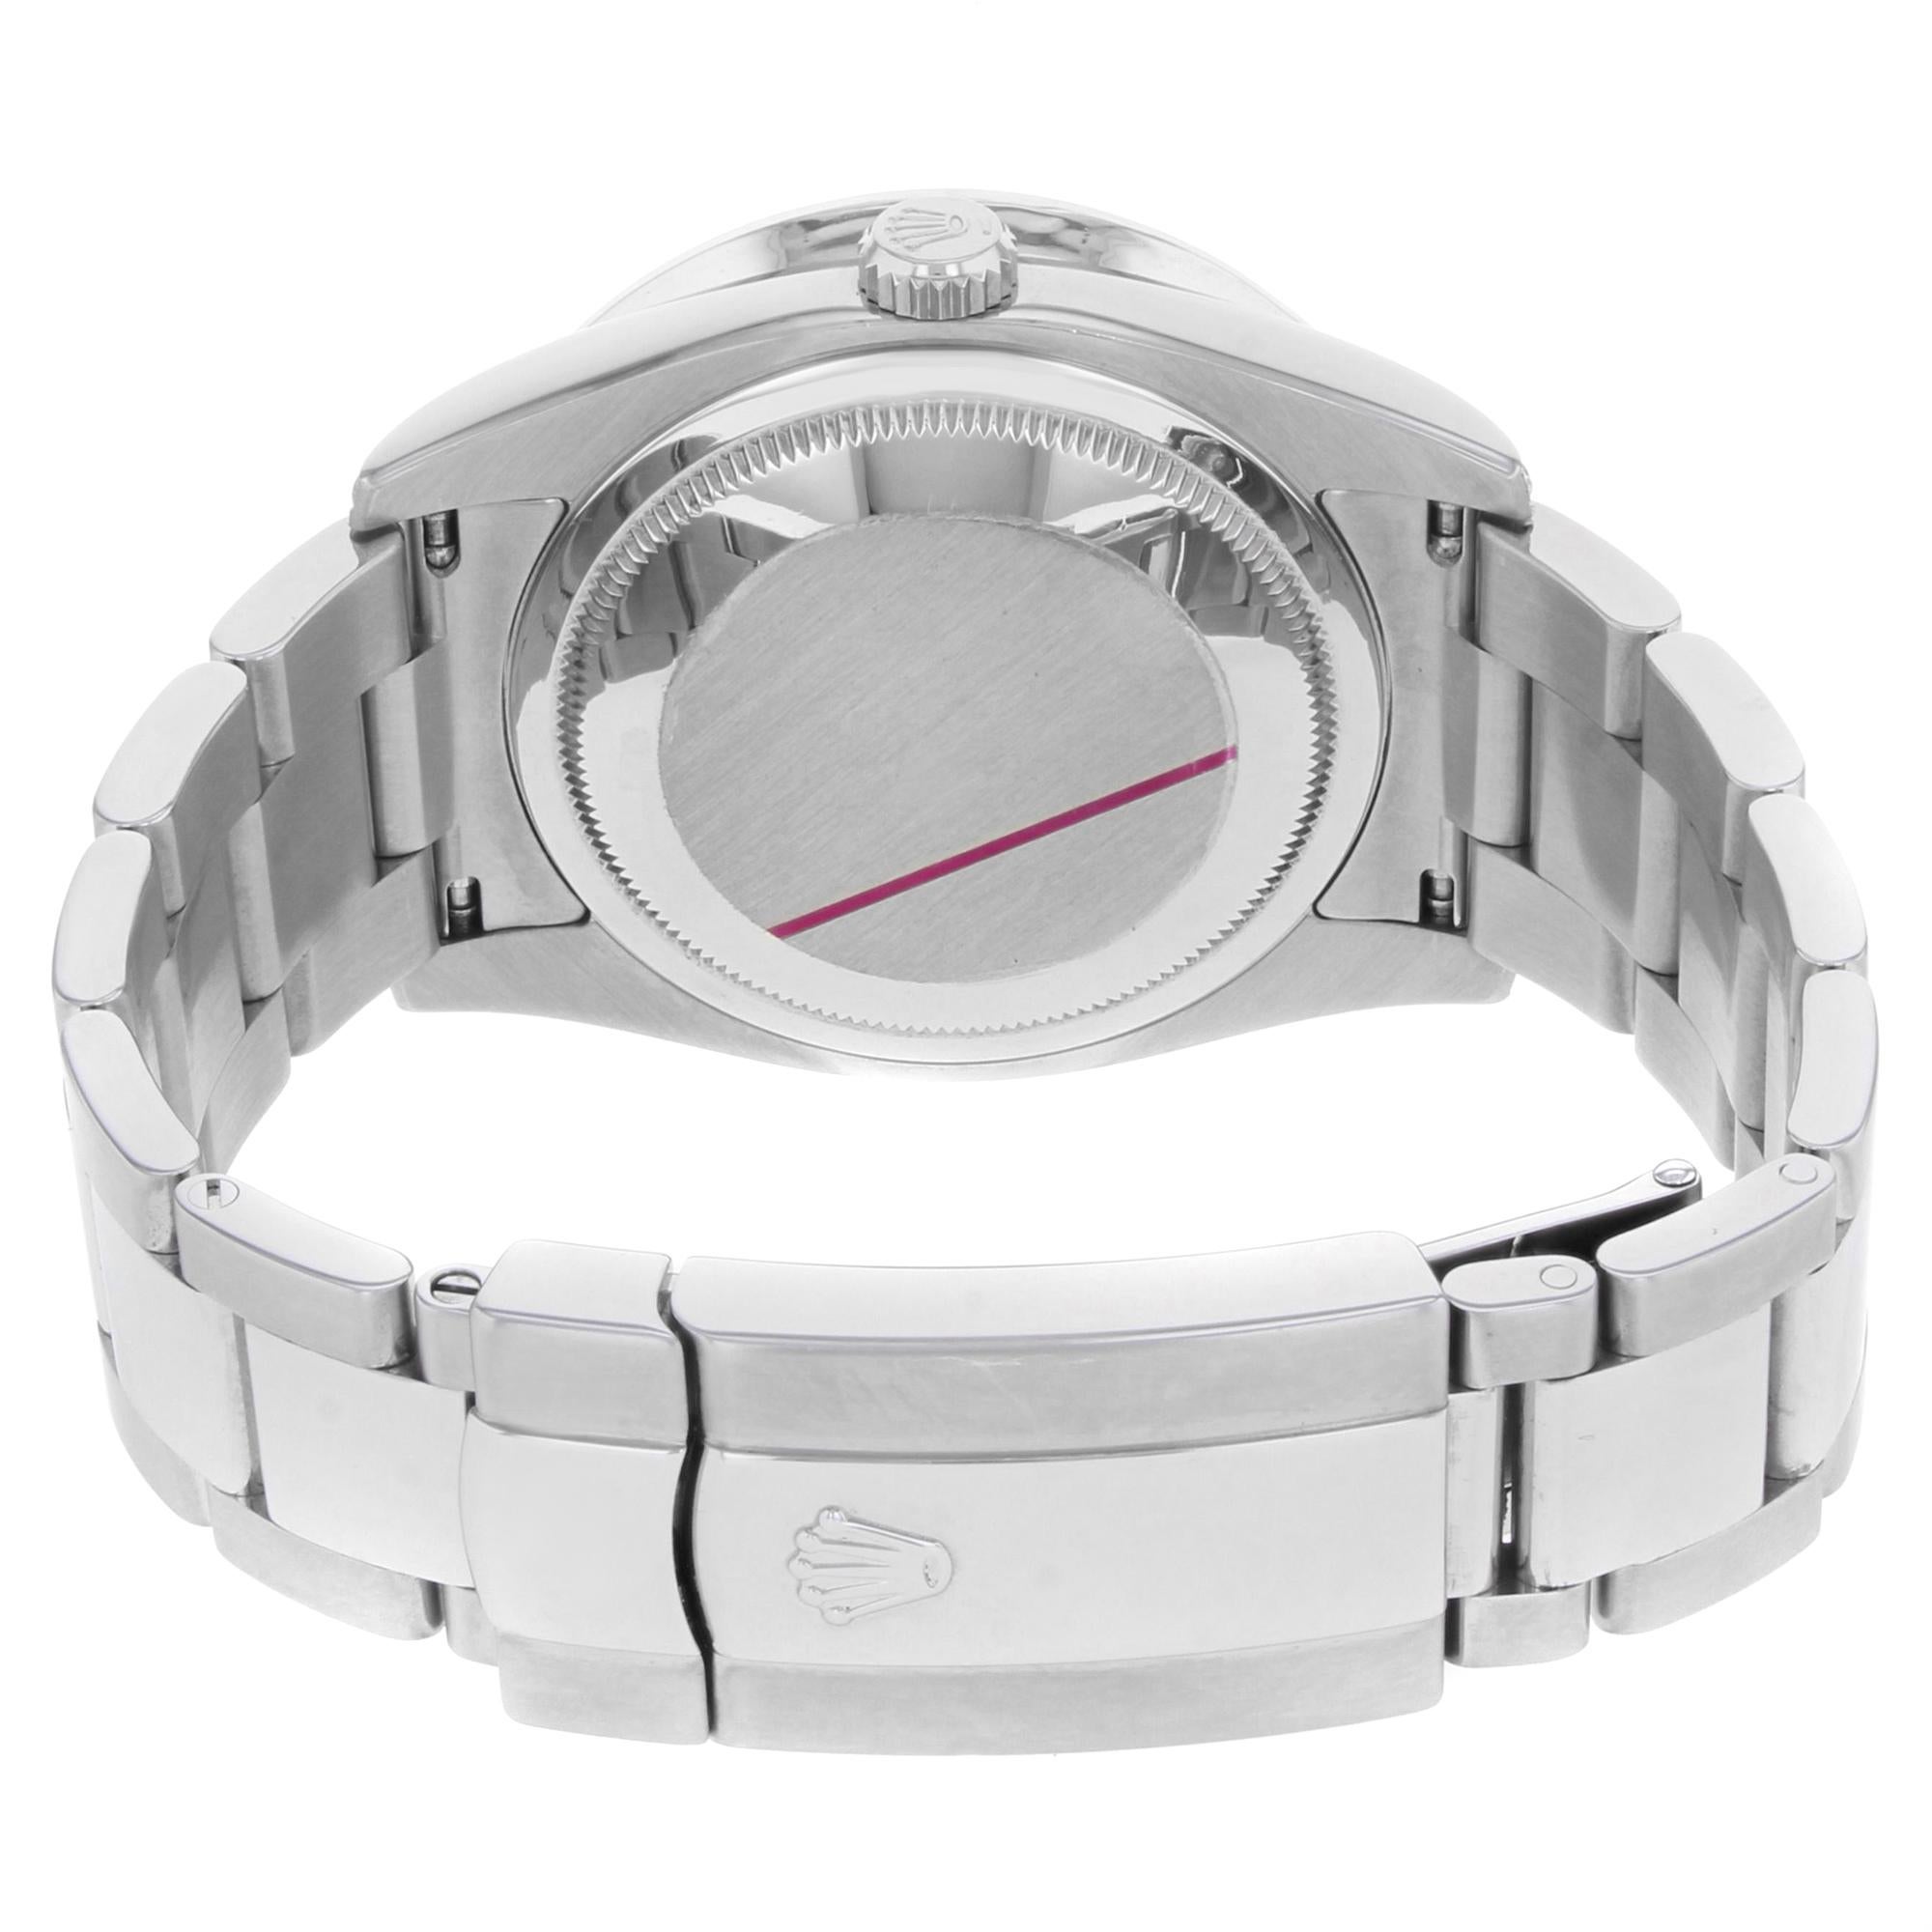 Rolex Stainless Steel Diamond Datejust Automatic Wristwatch Ref 116234, 2008 1